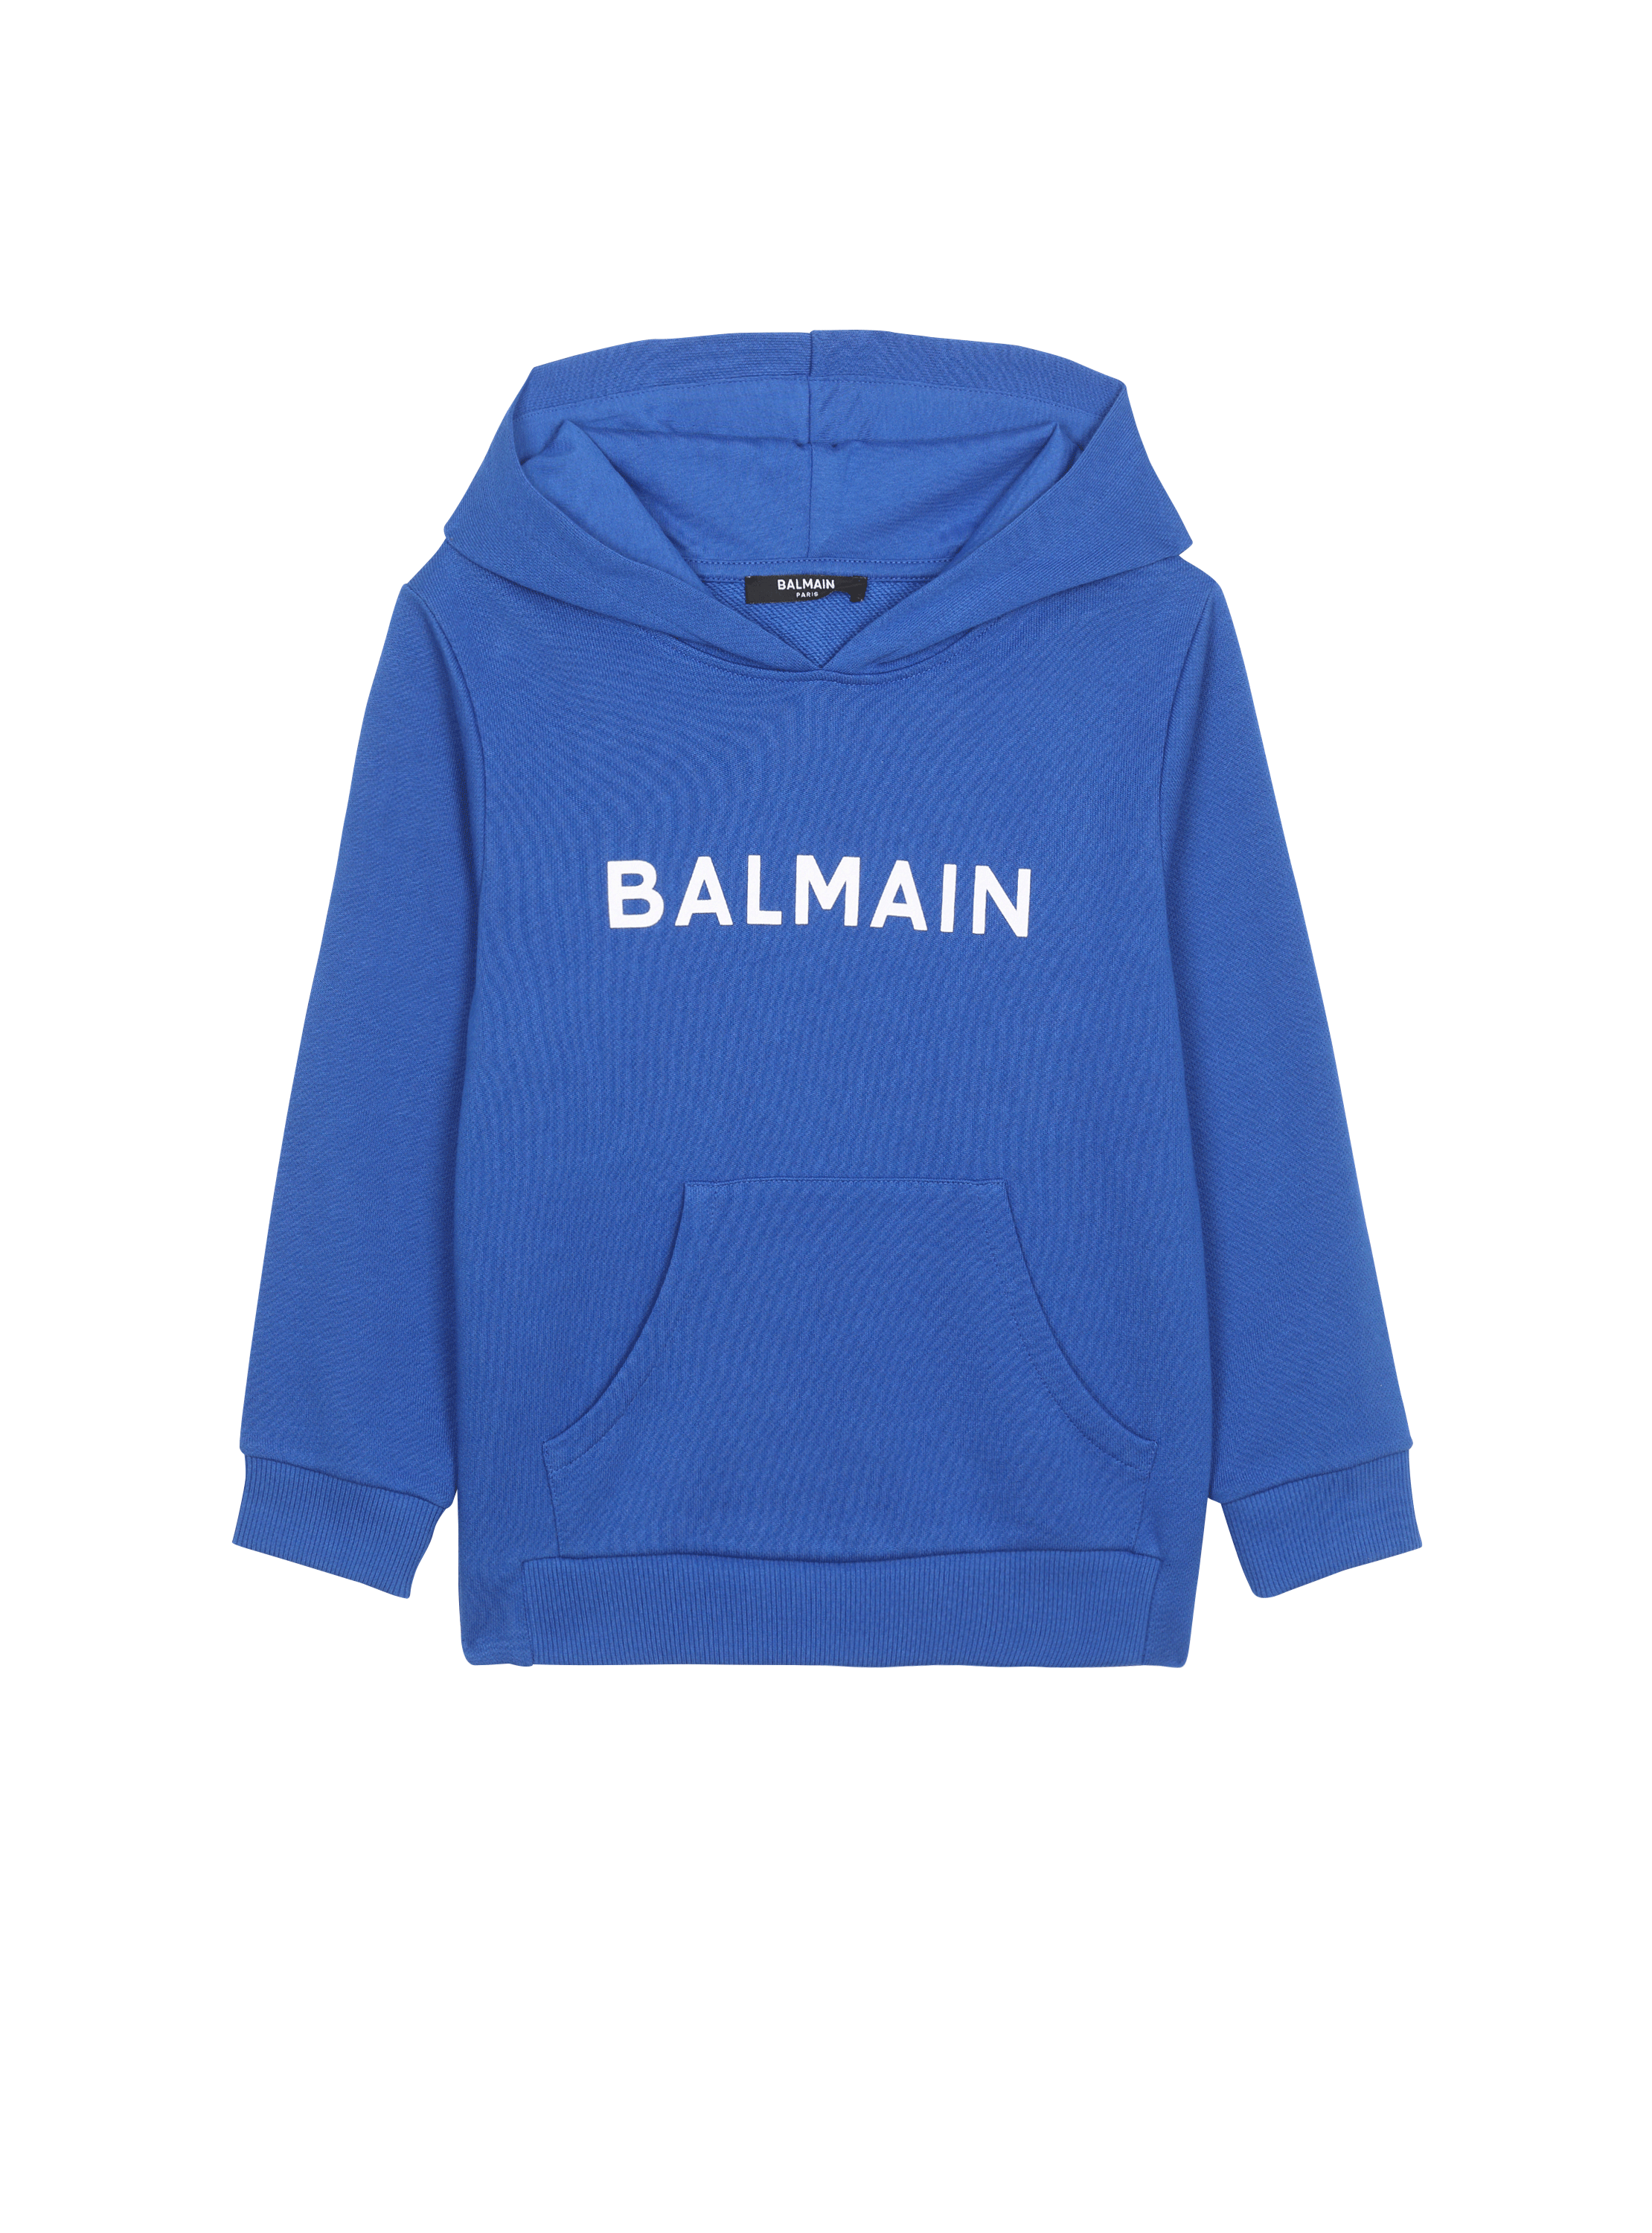 Cotton Balmain logo hoodie